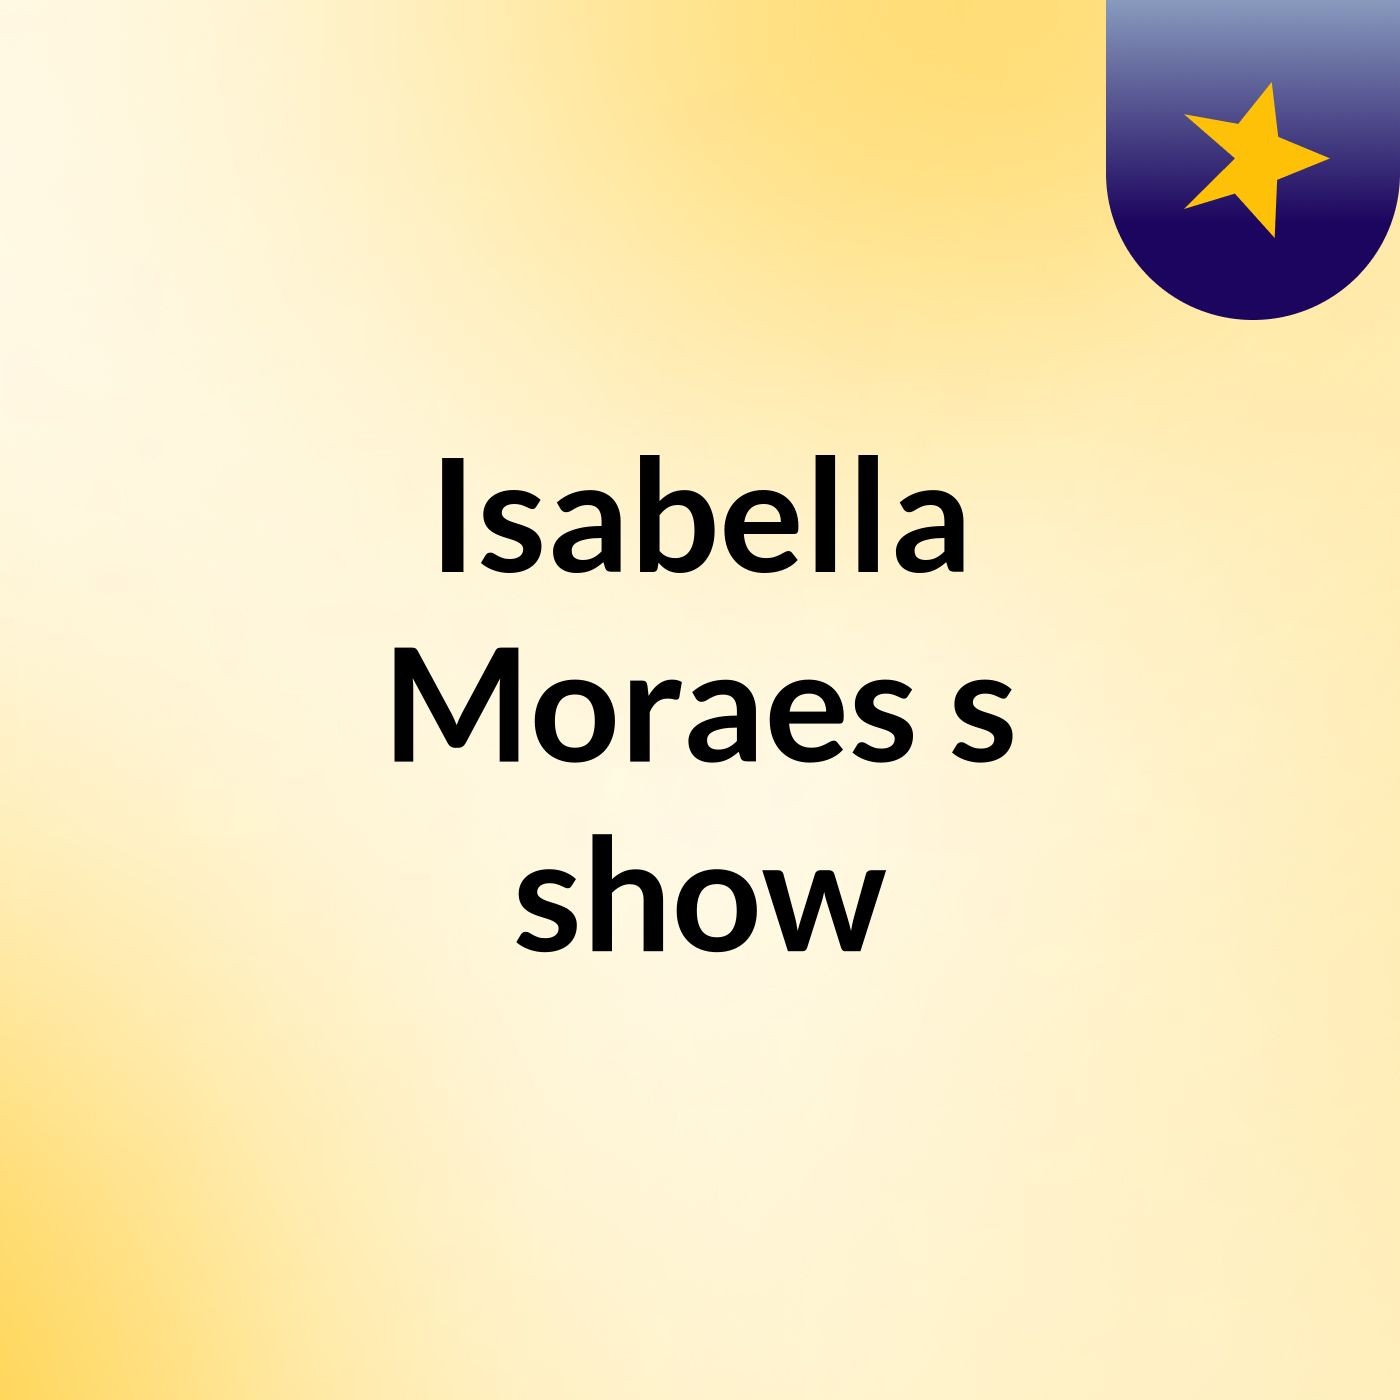 Isabella Moraes's show